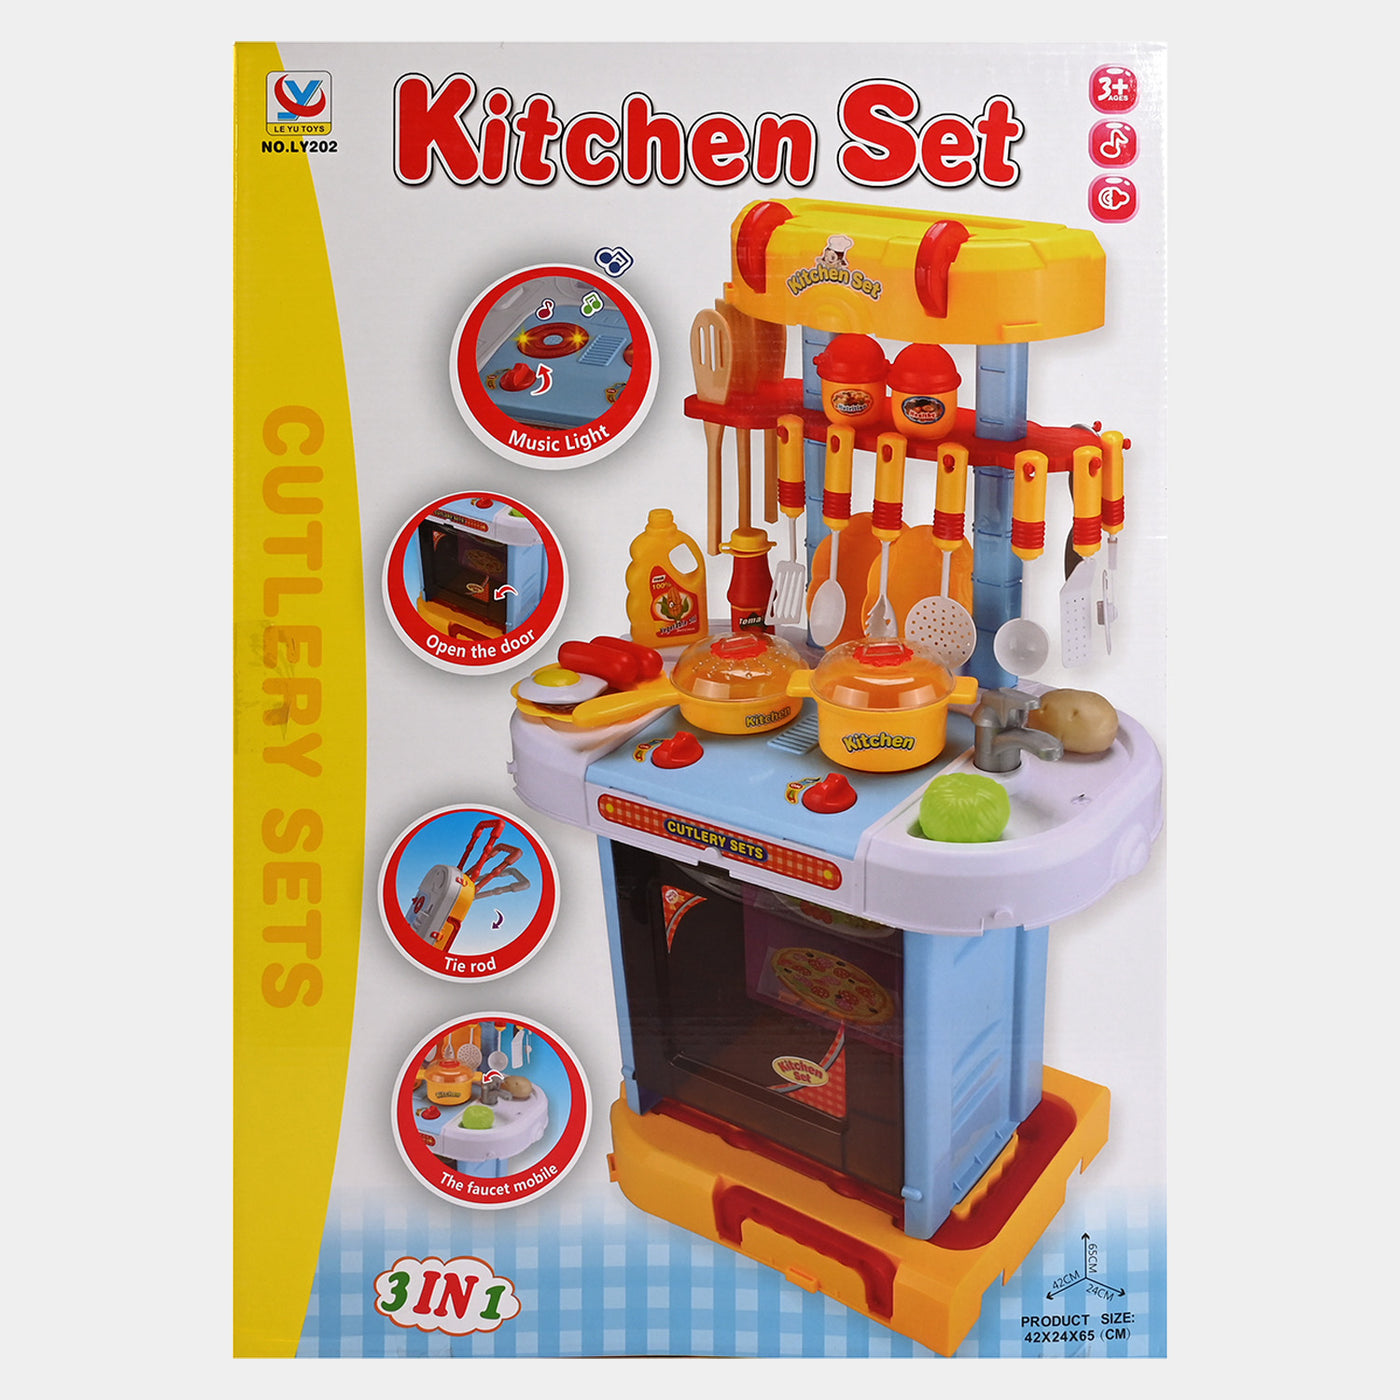 Kitchen Set For Girls